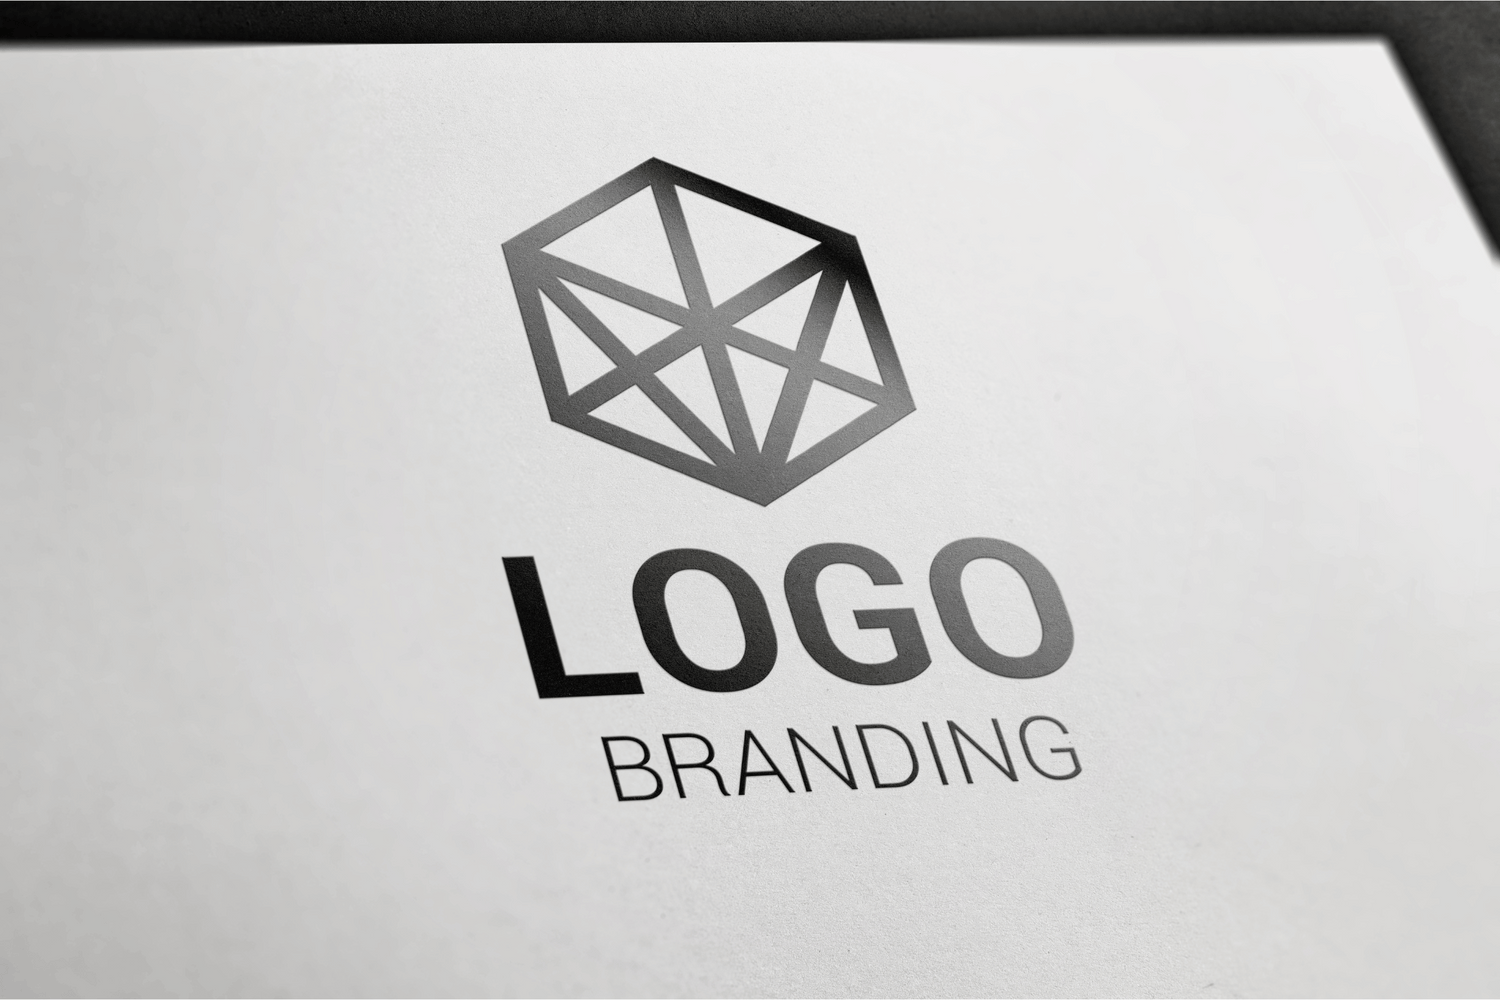 Creative team brainstorming a custom logo design on a digital tablet, symbolizing unique brand identity creation.